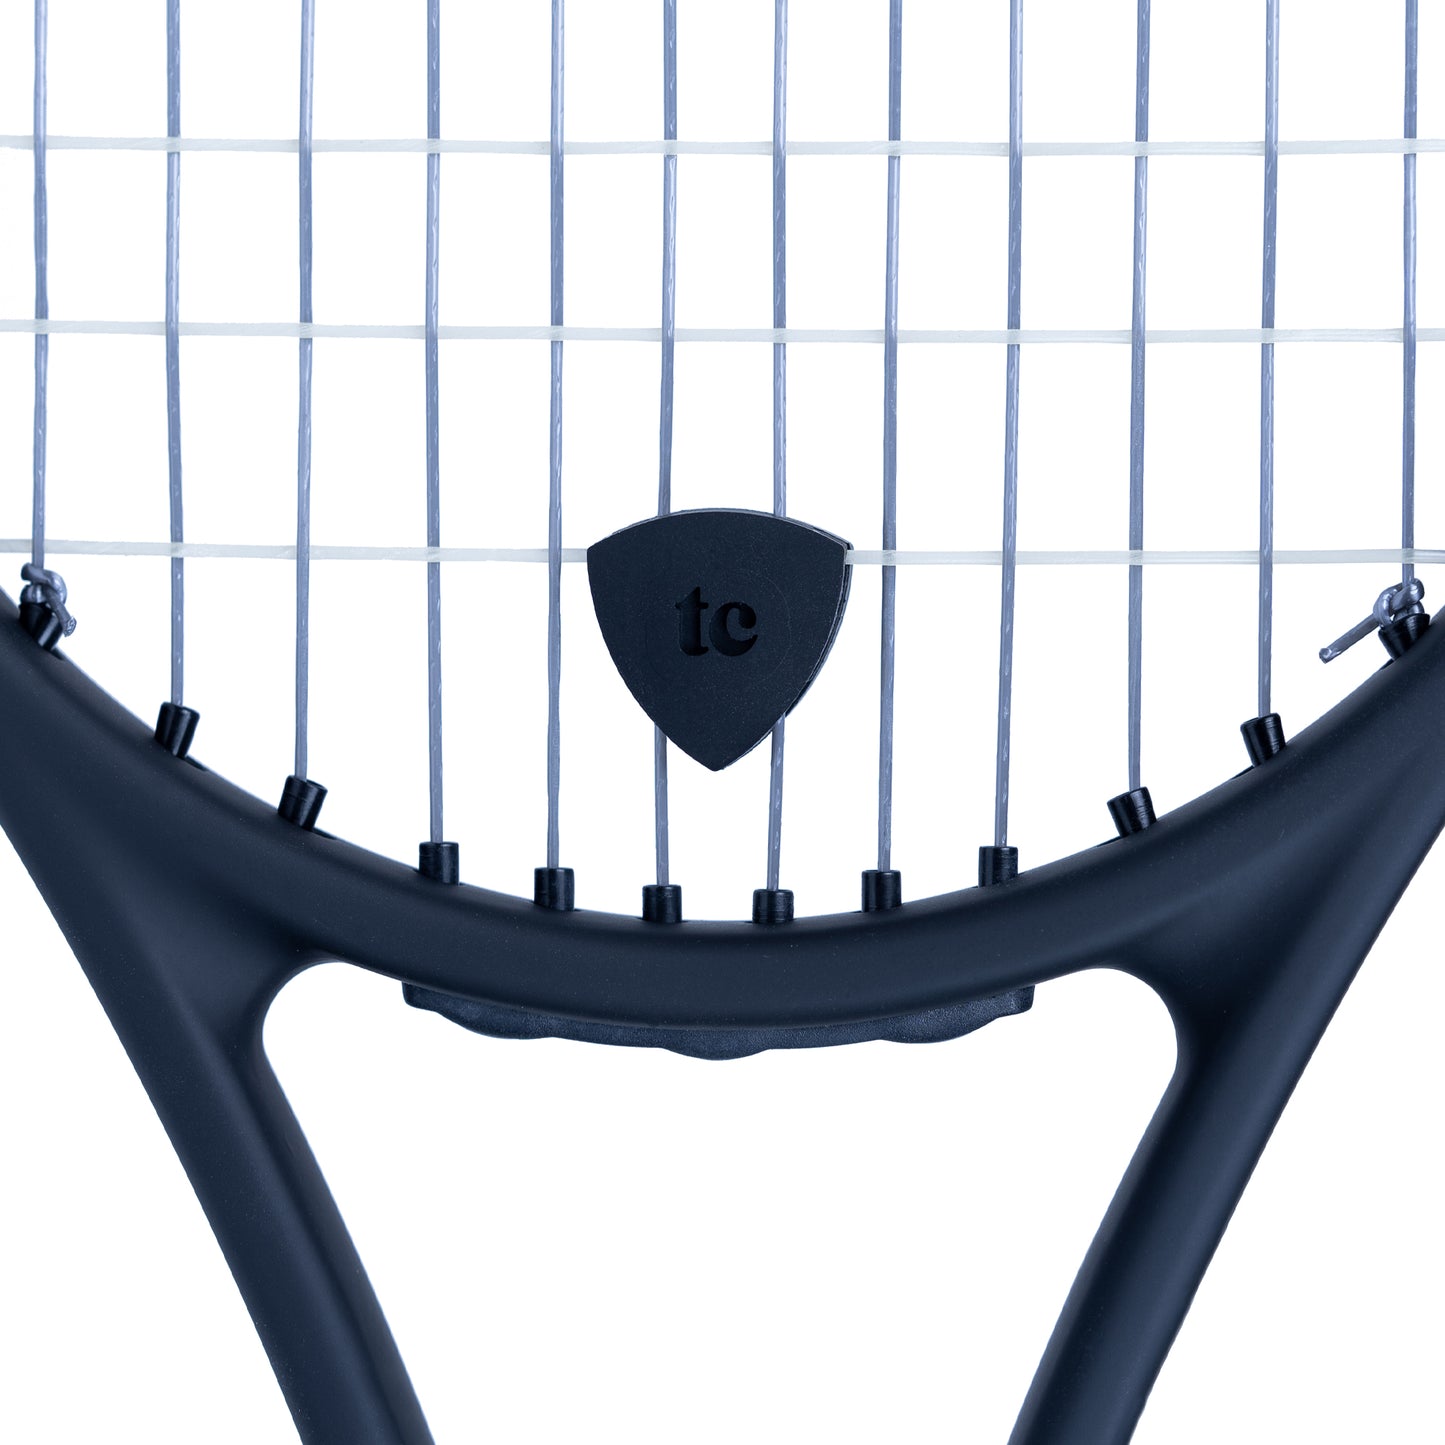 TennisCompanion Vibration Dampener Installed Within Tennis Strings